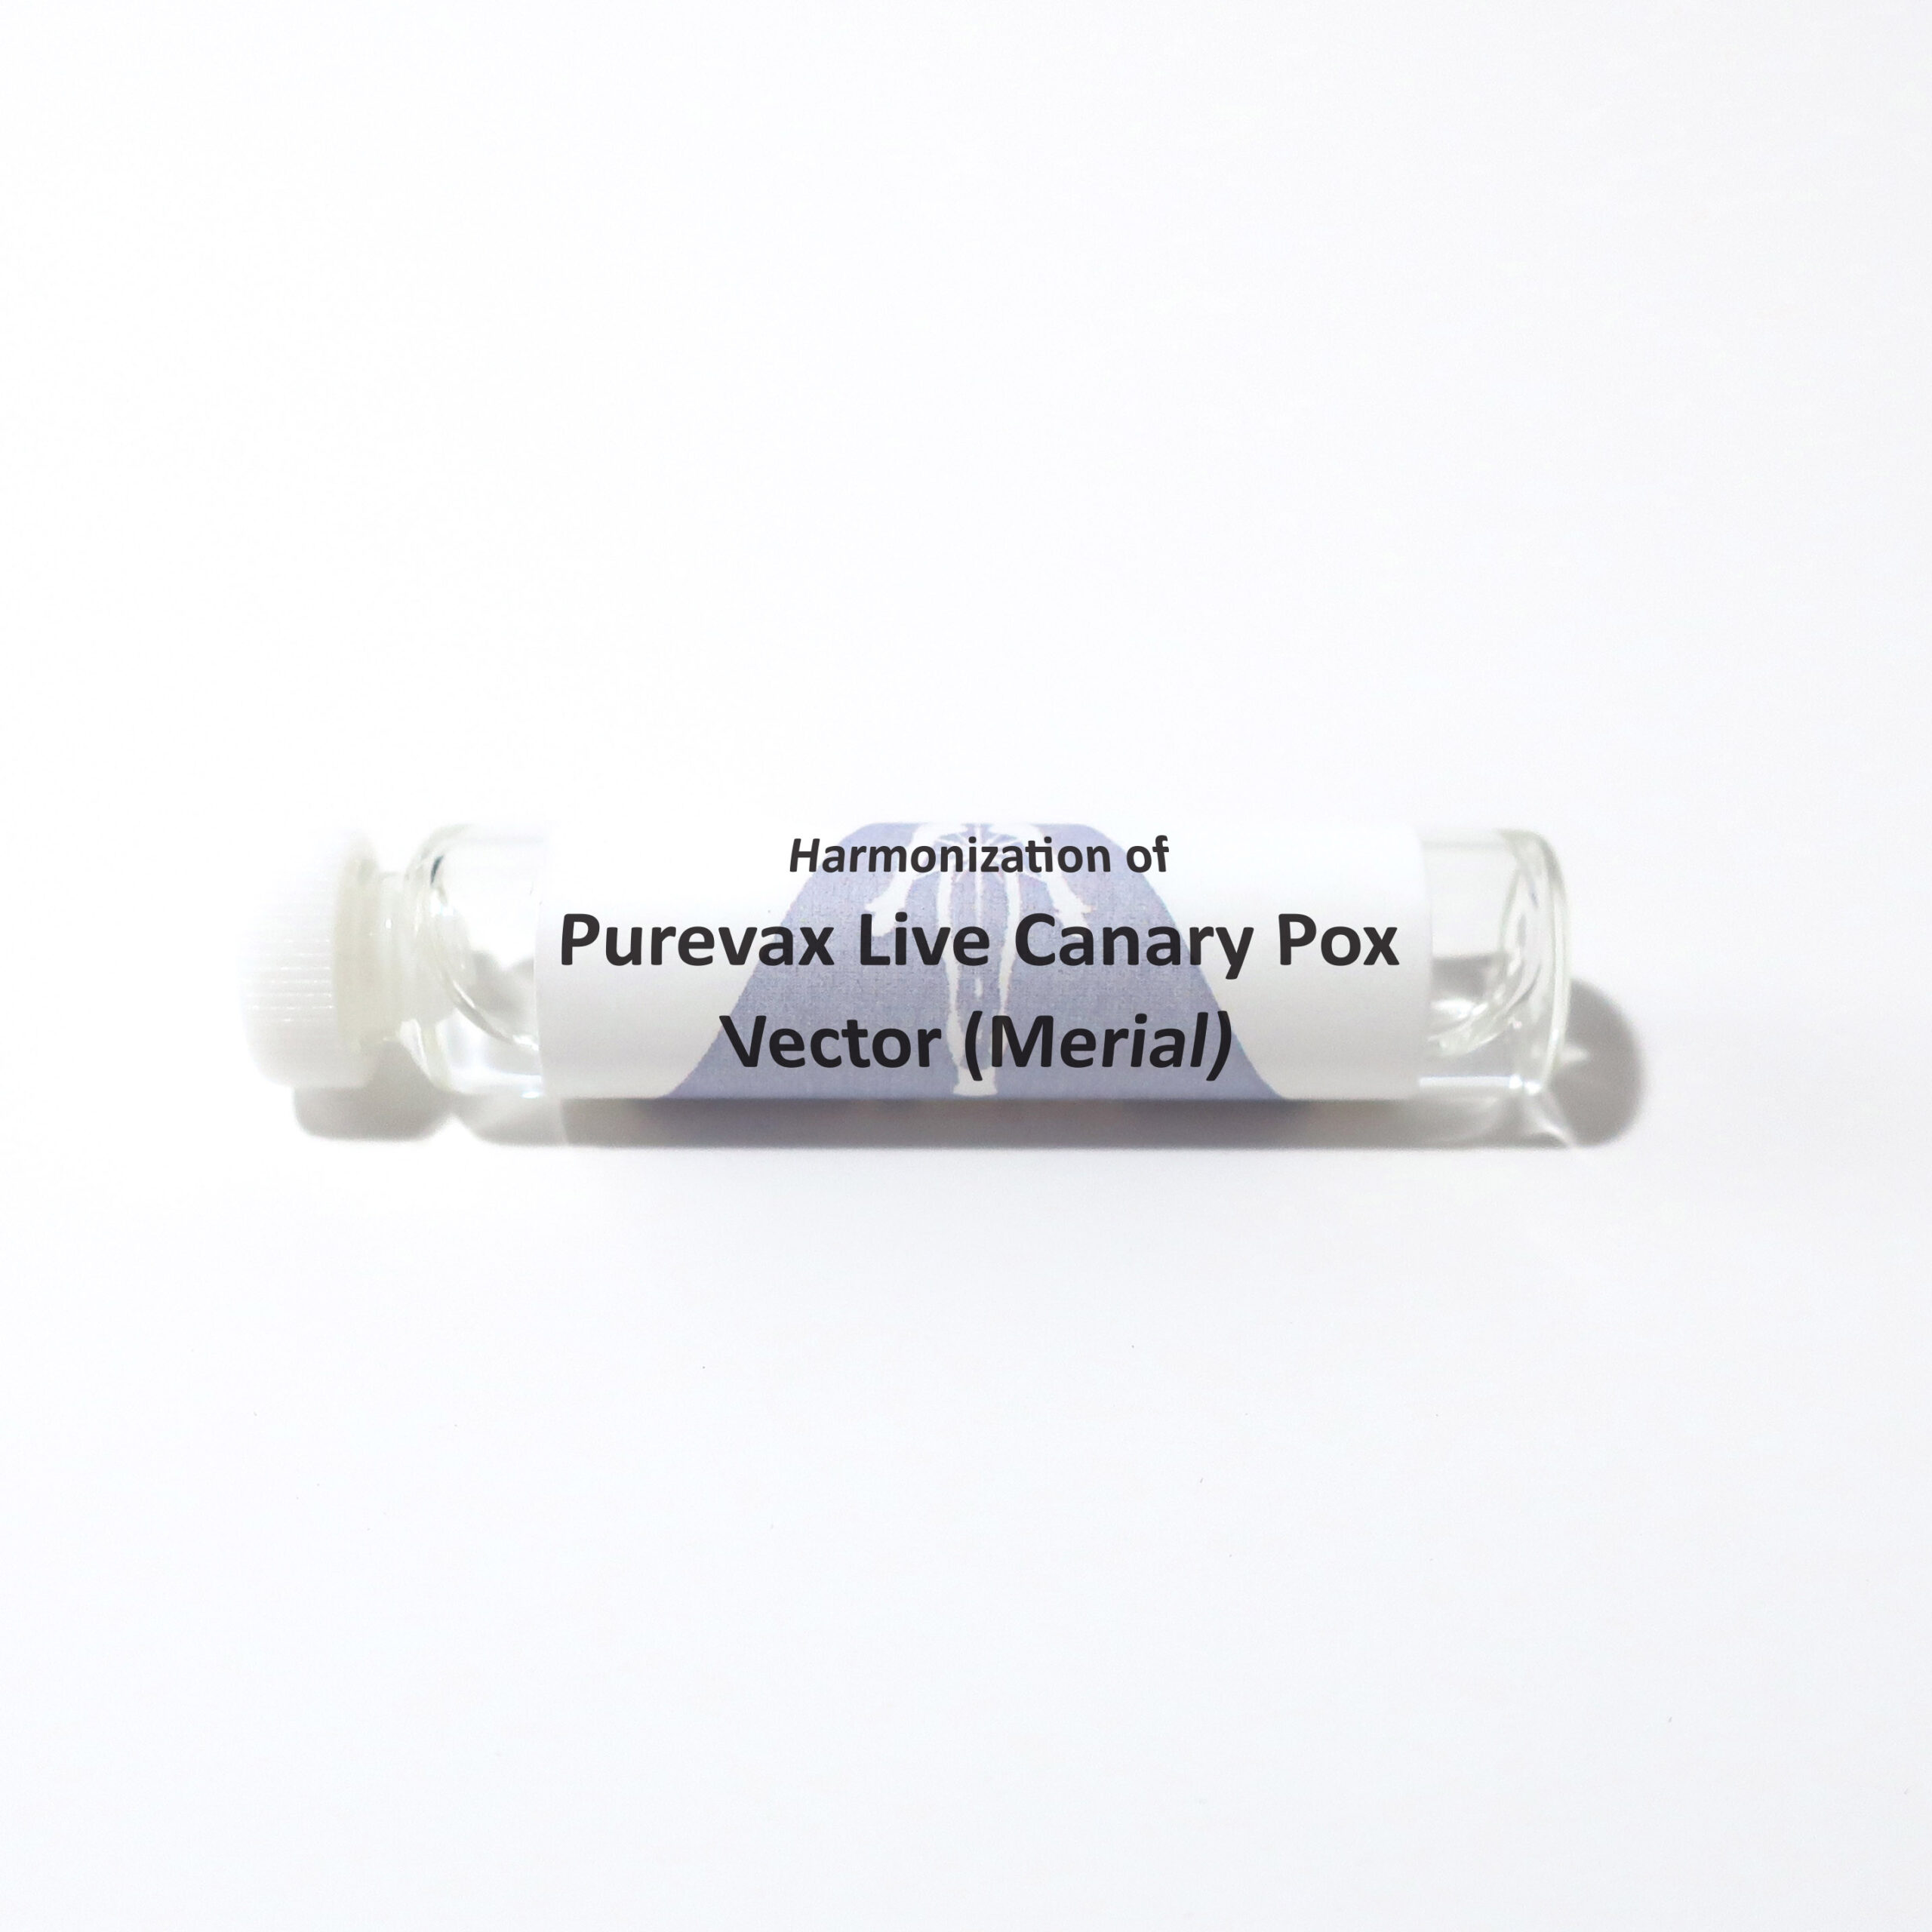 Purevax Live Canary Pox Vector (Merial)